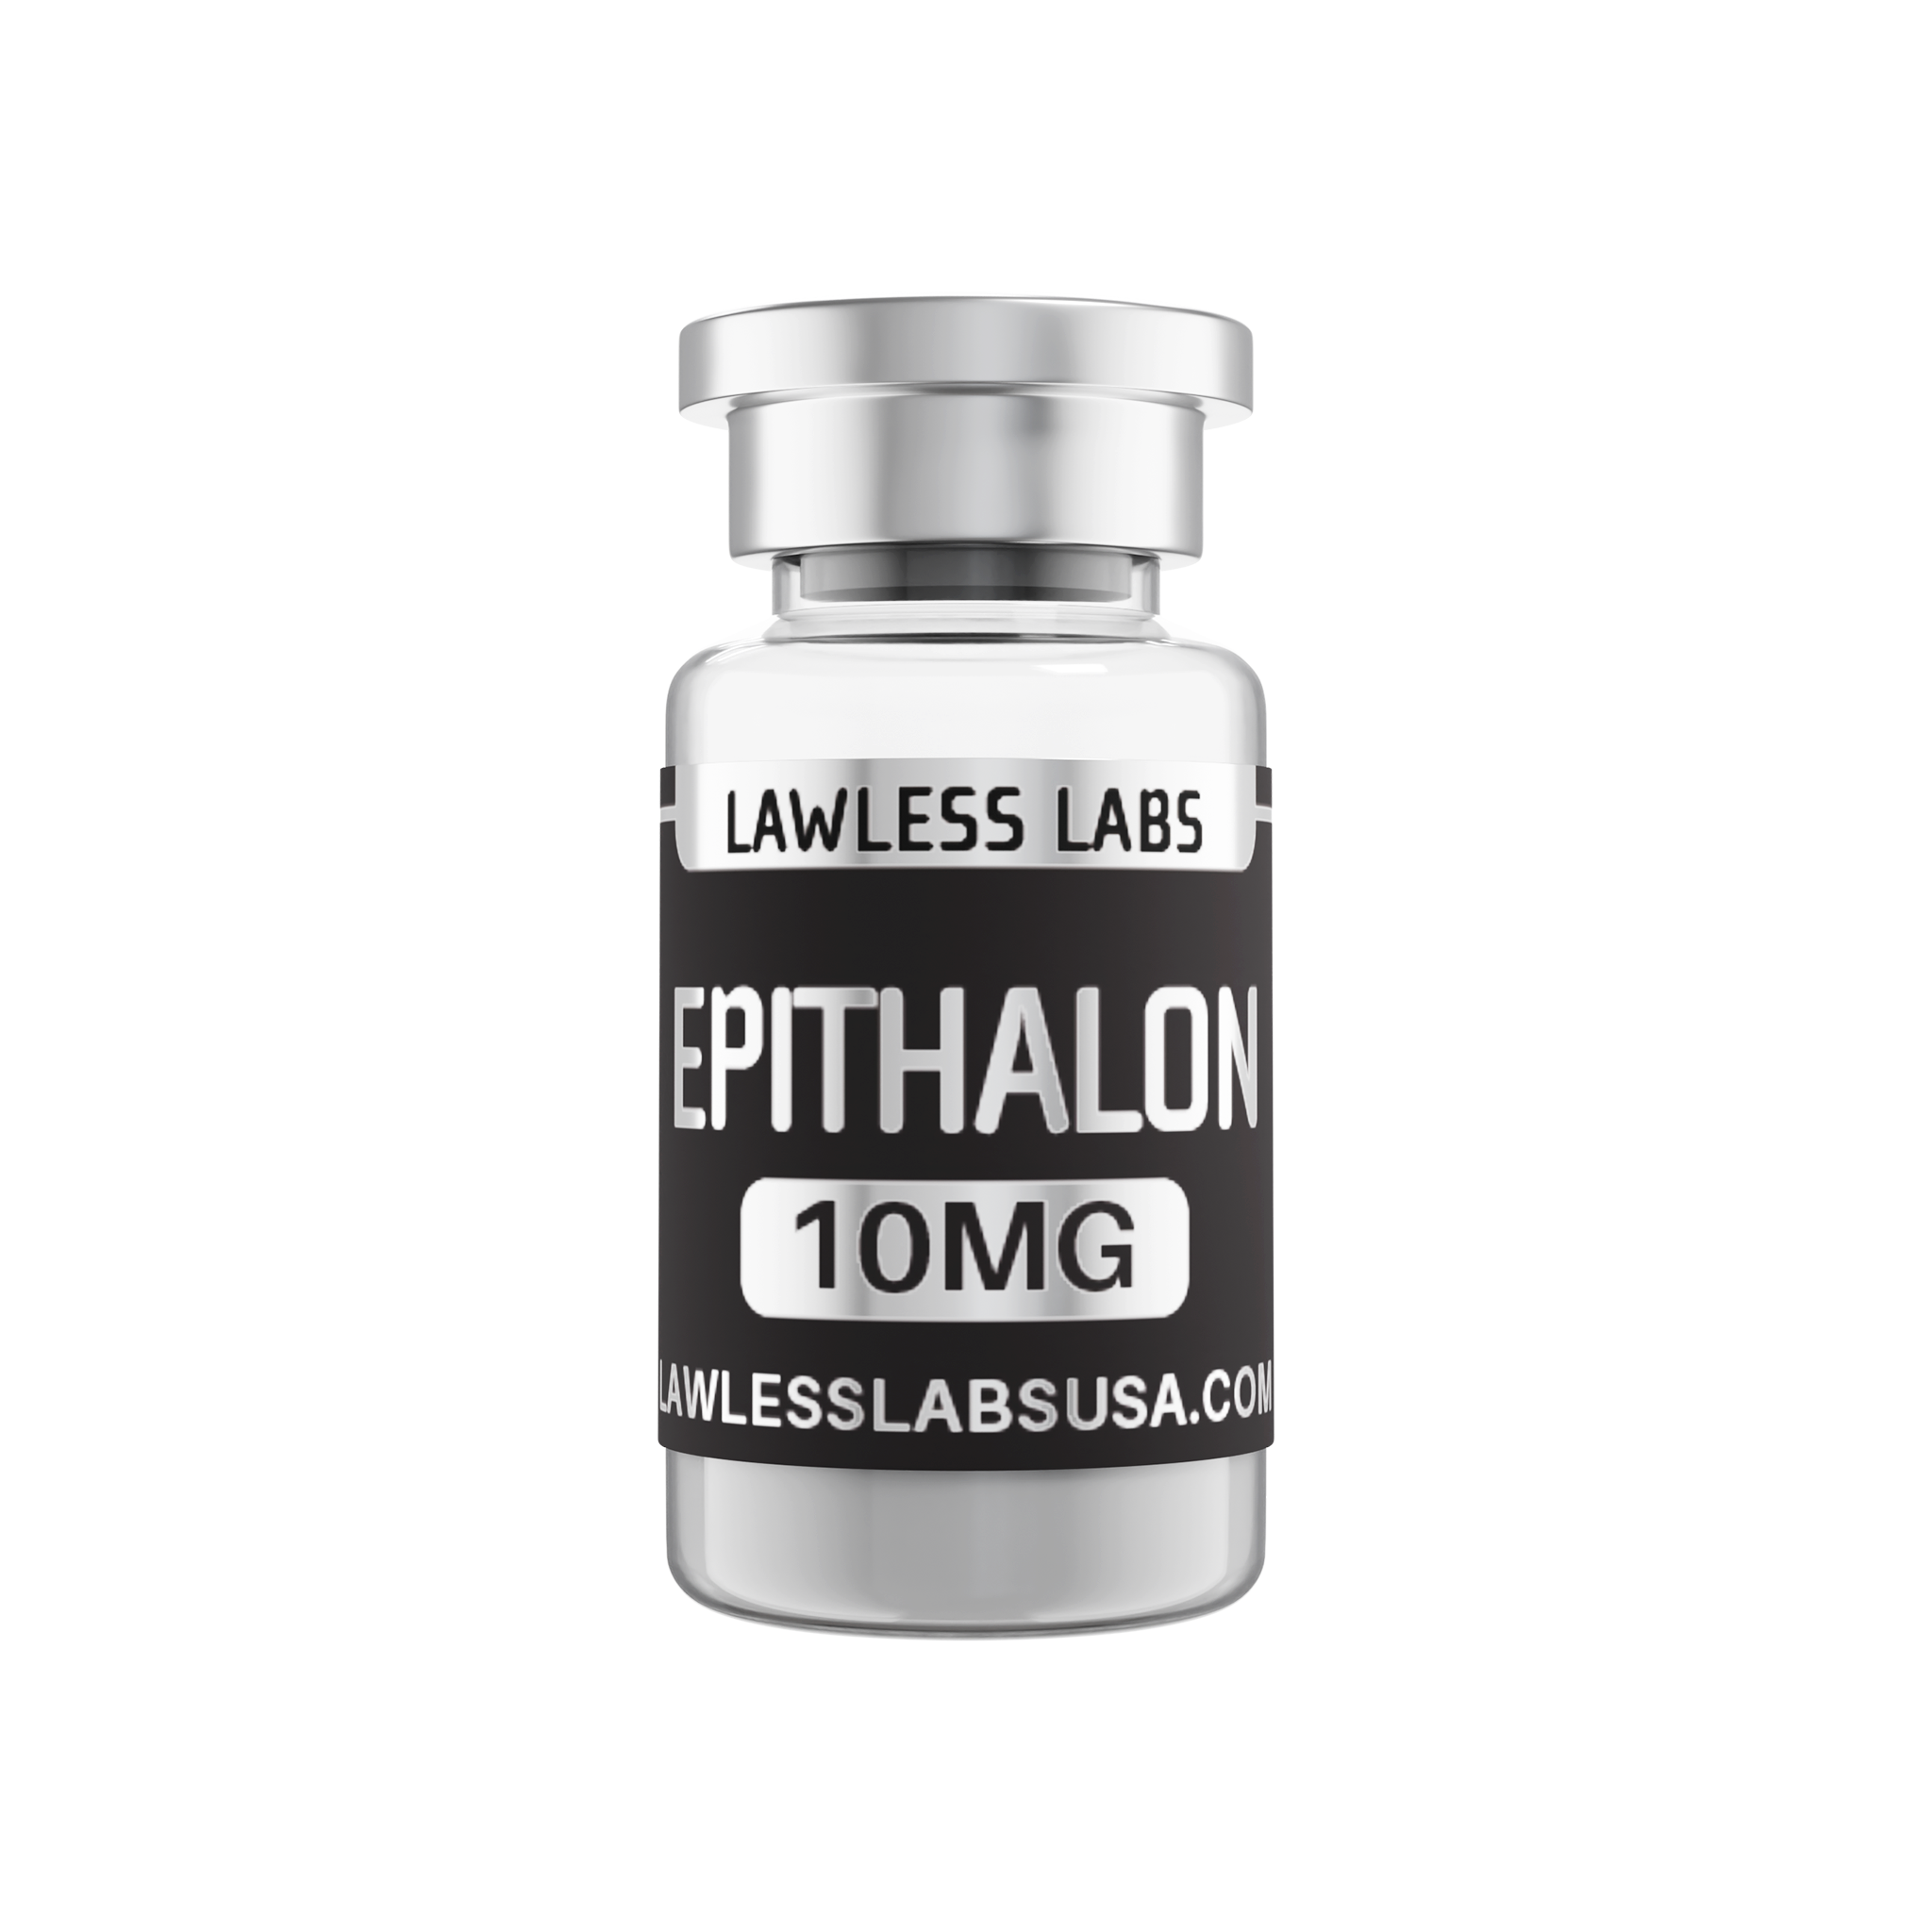 Epithalon (10mg)